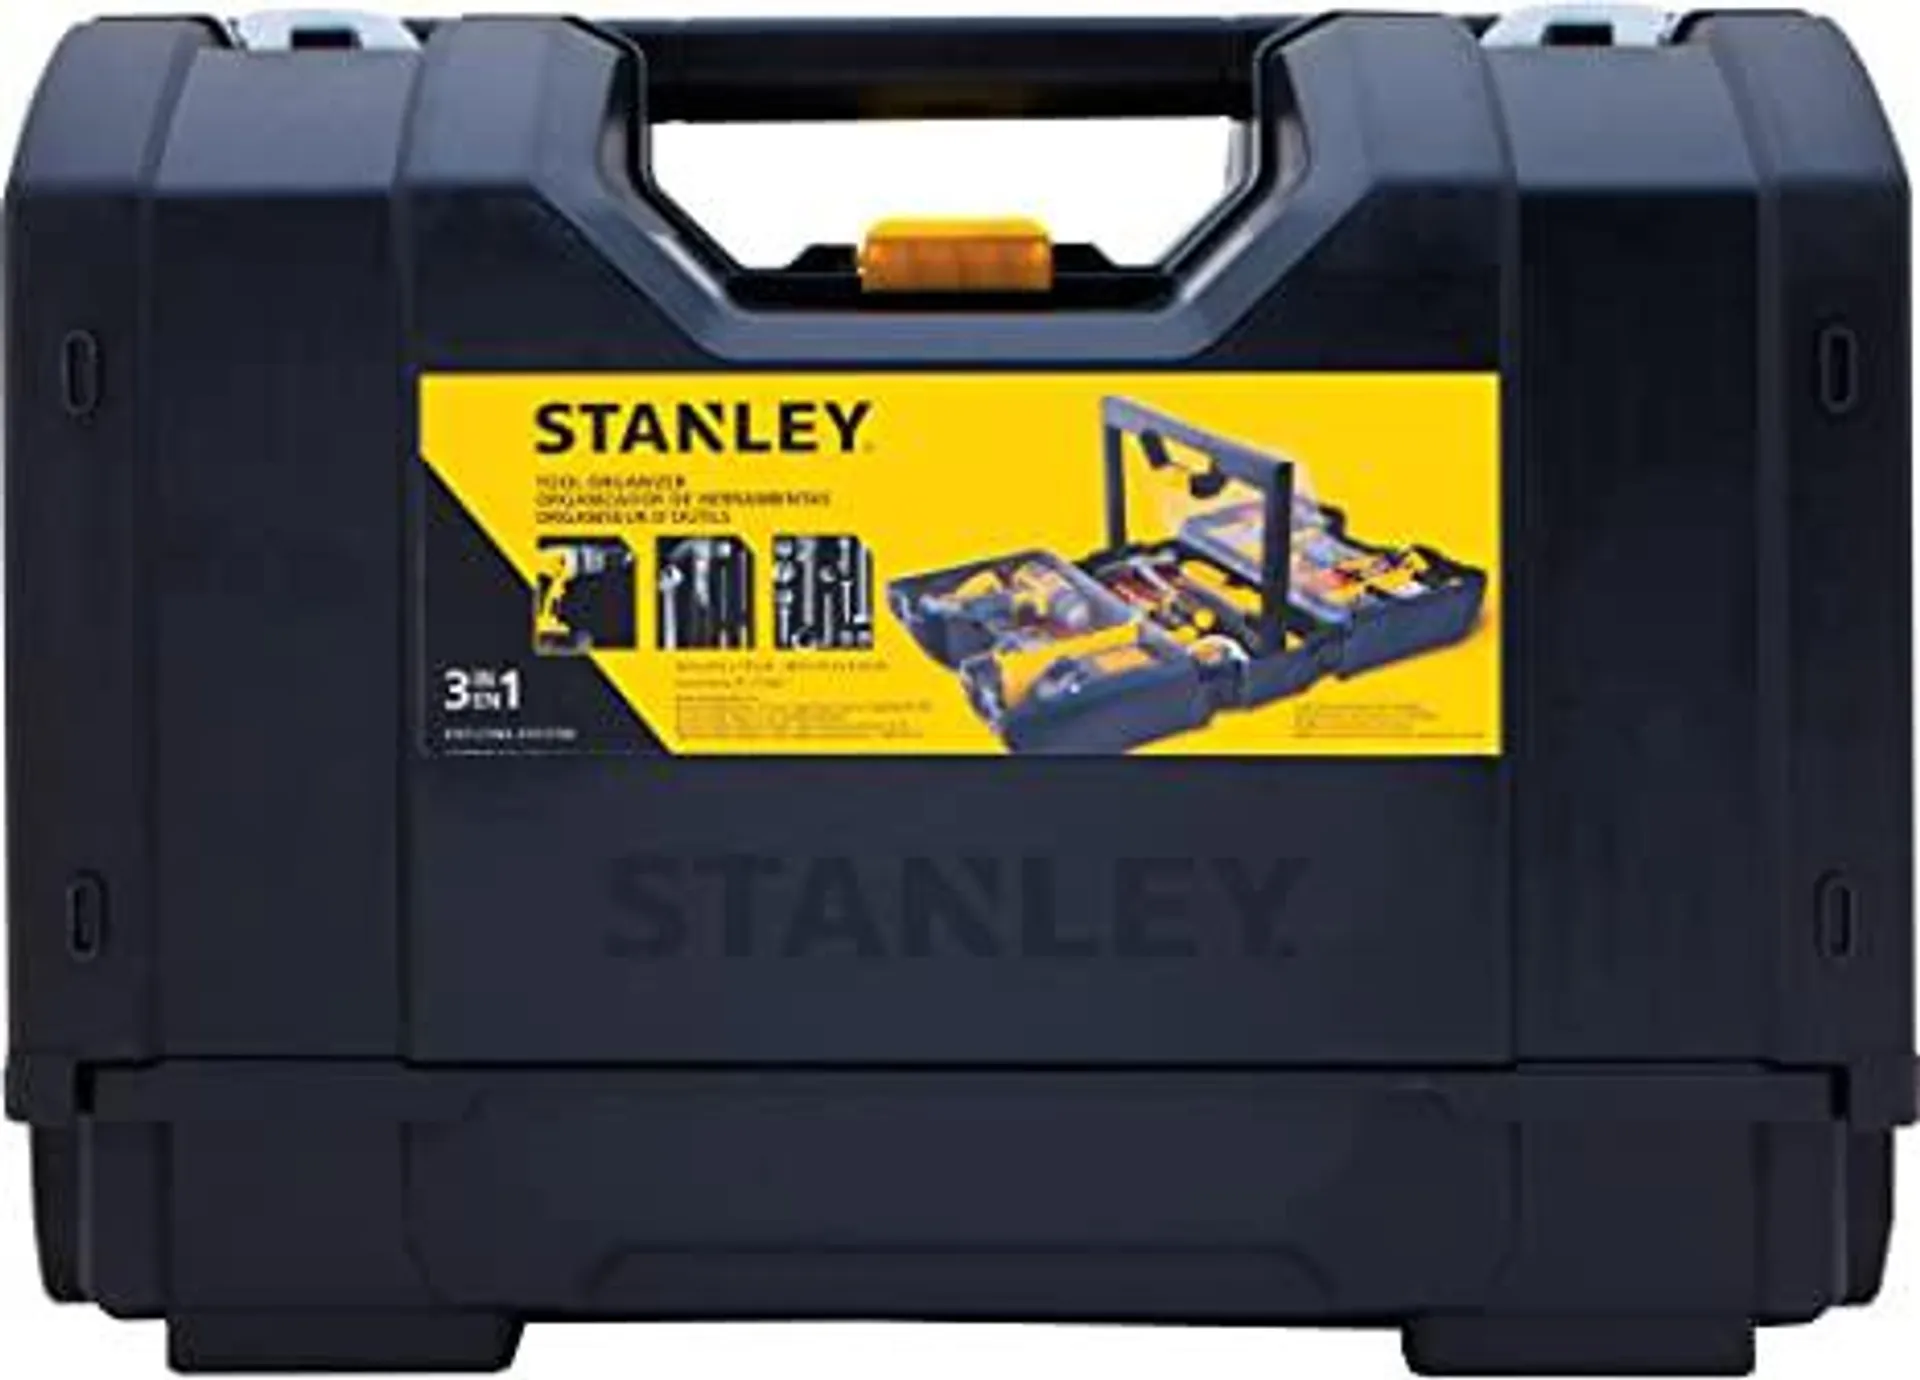 STANLEY Organizer Box With Dividers, 3-in-1 Organizer (STST17700)